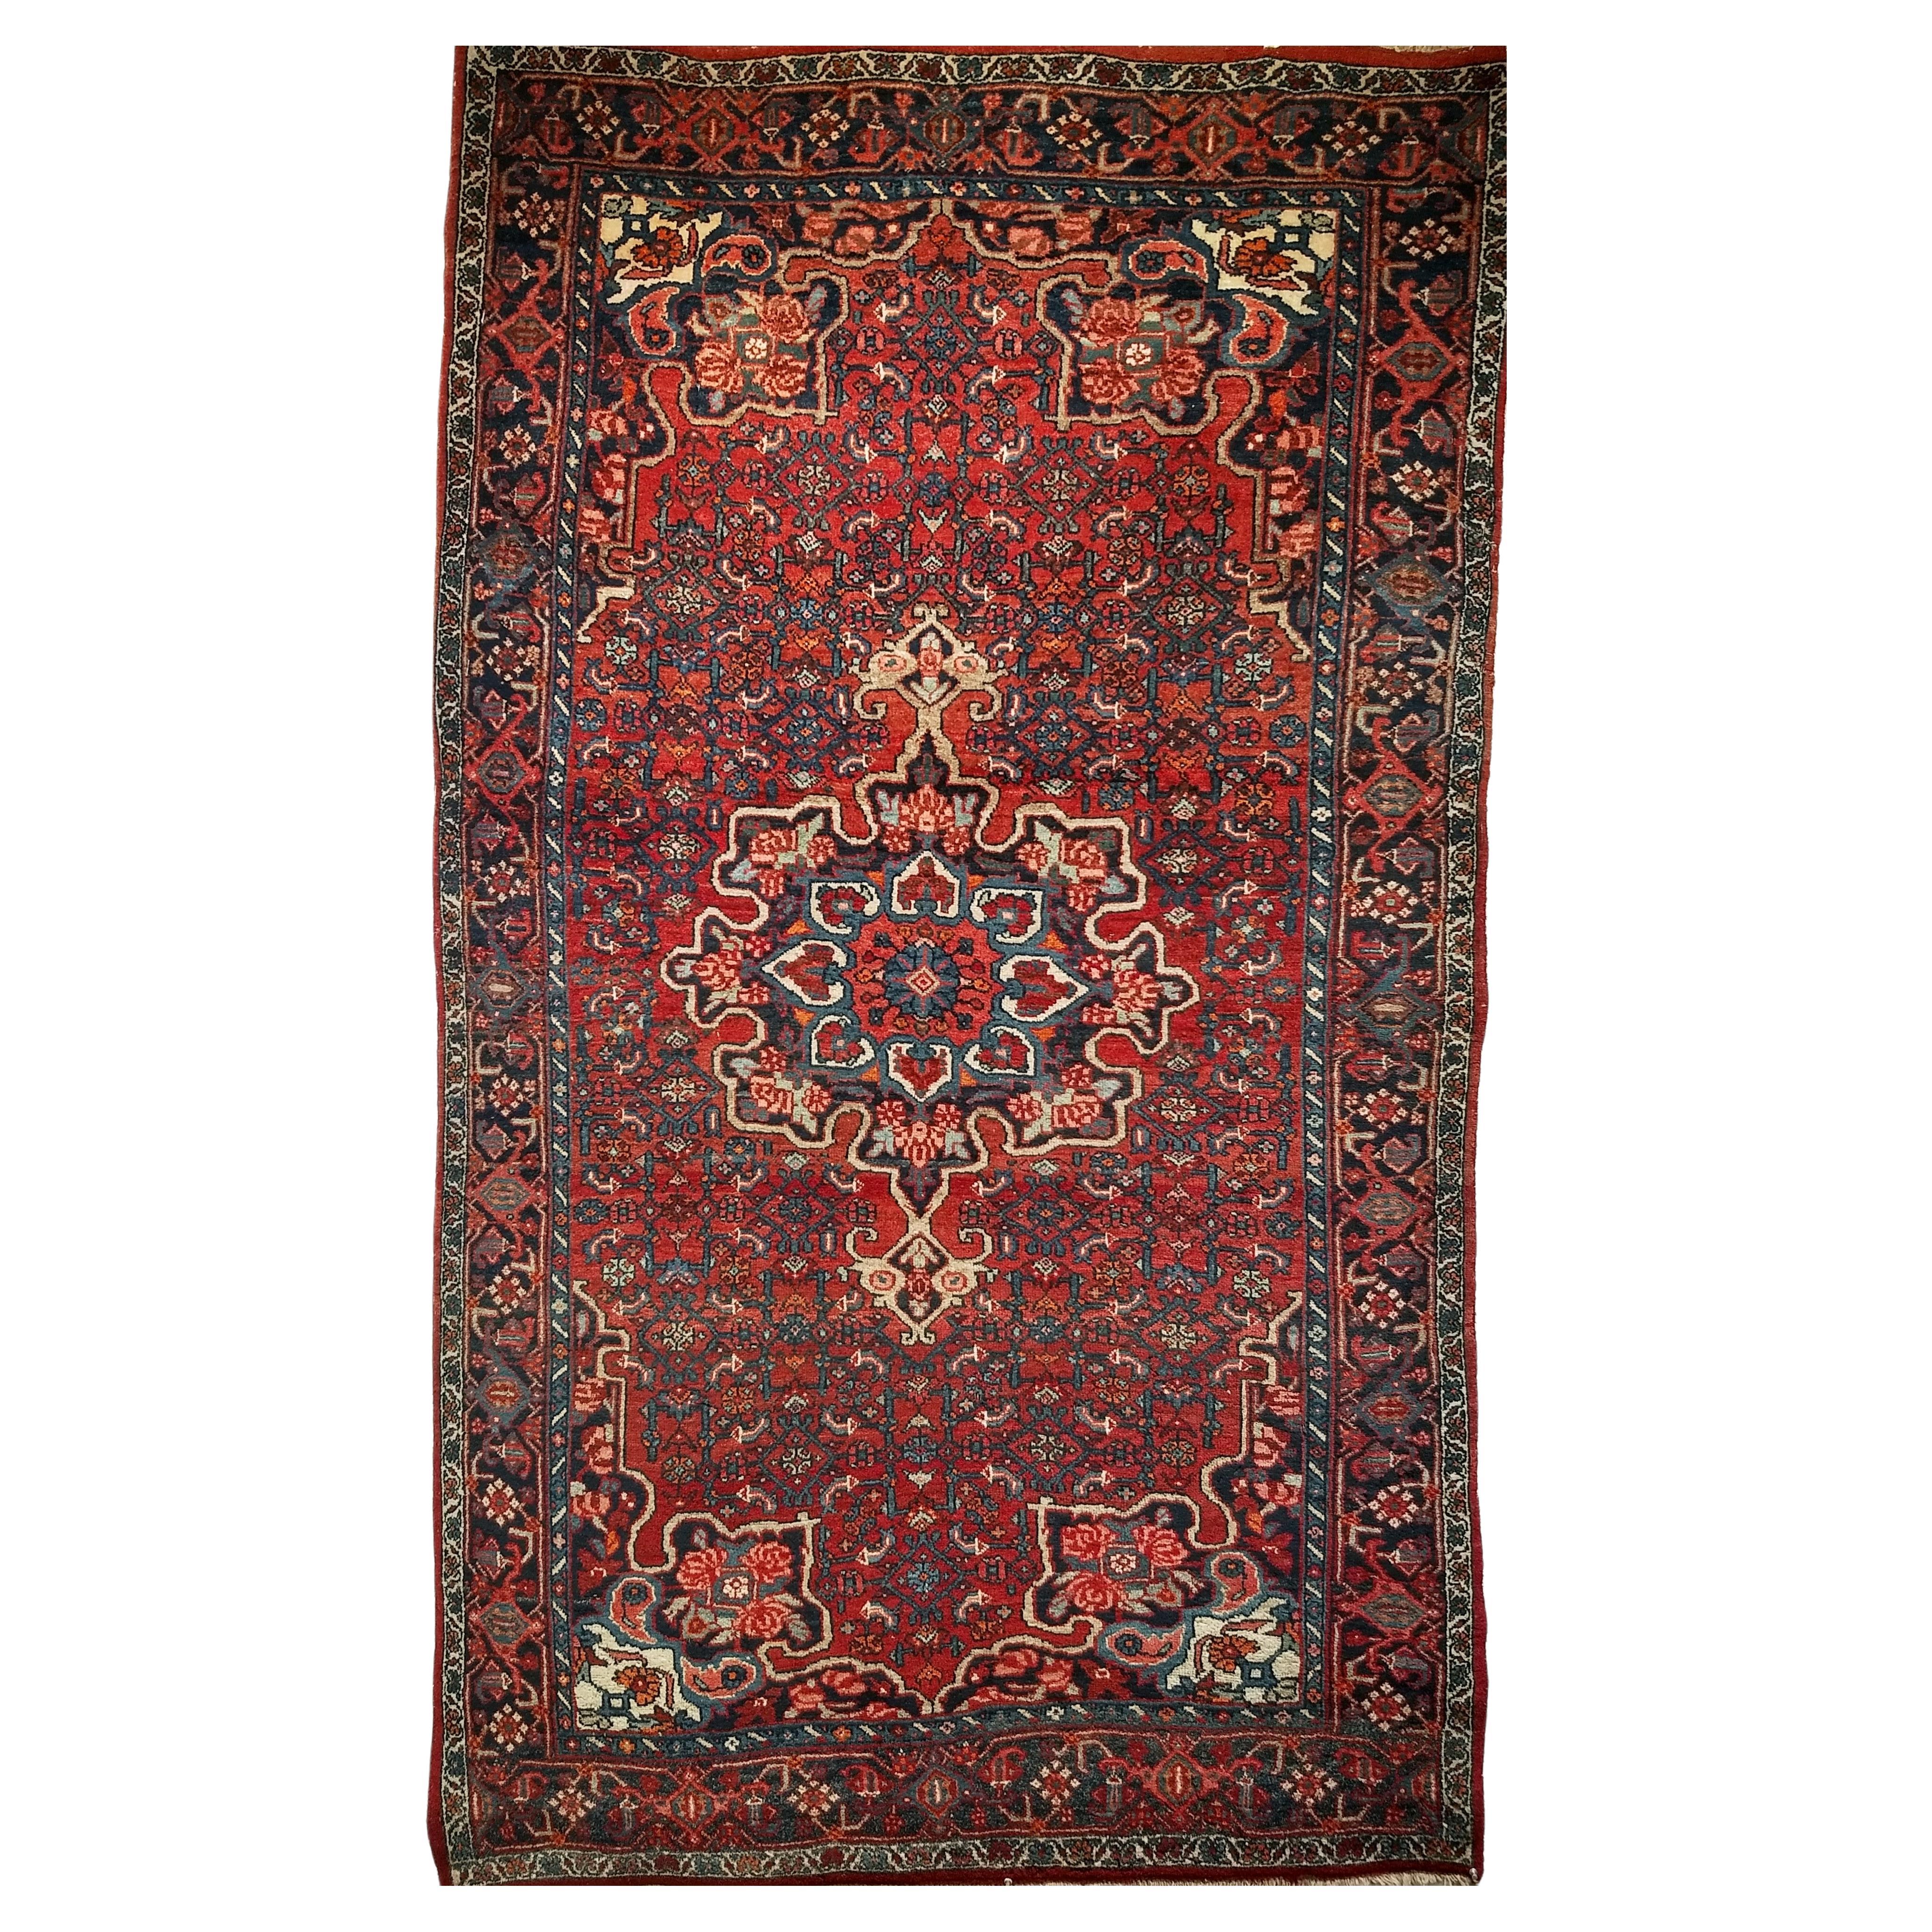 Tapis persan Bidjar vintage à motif floral en rouge, bleu, rose, ivoire